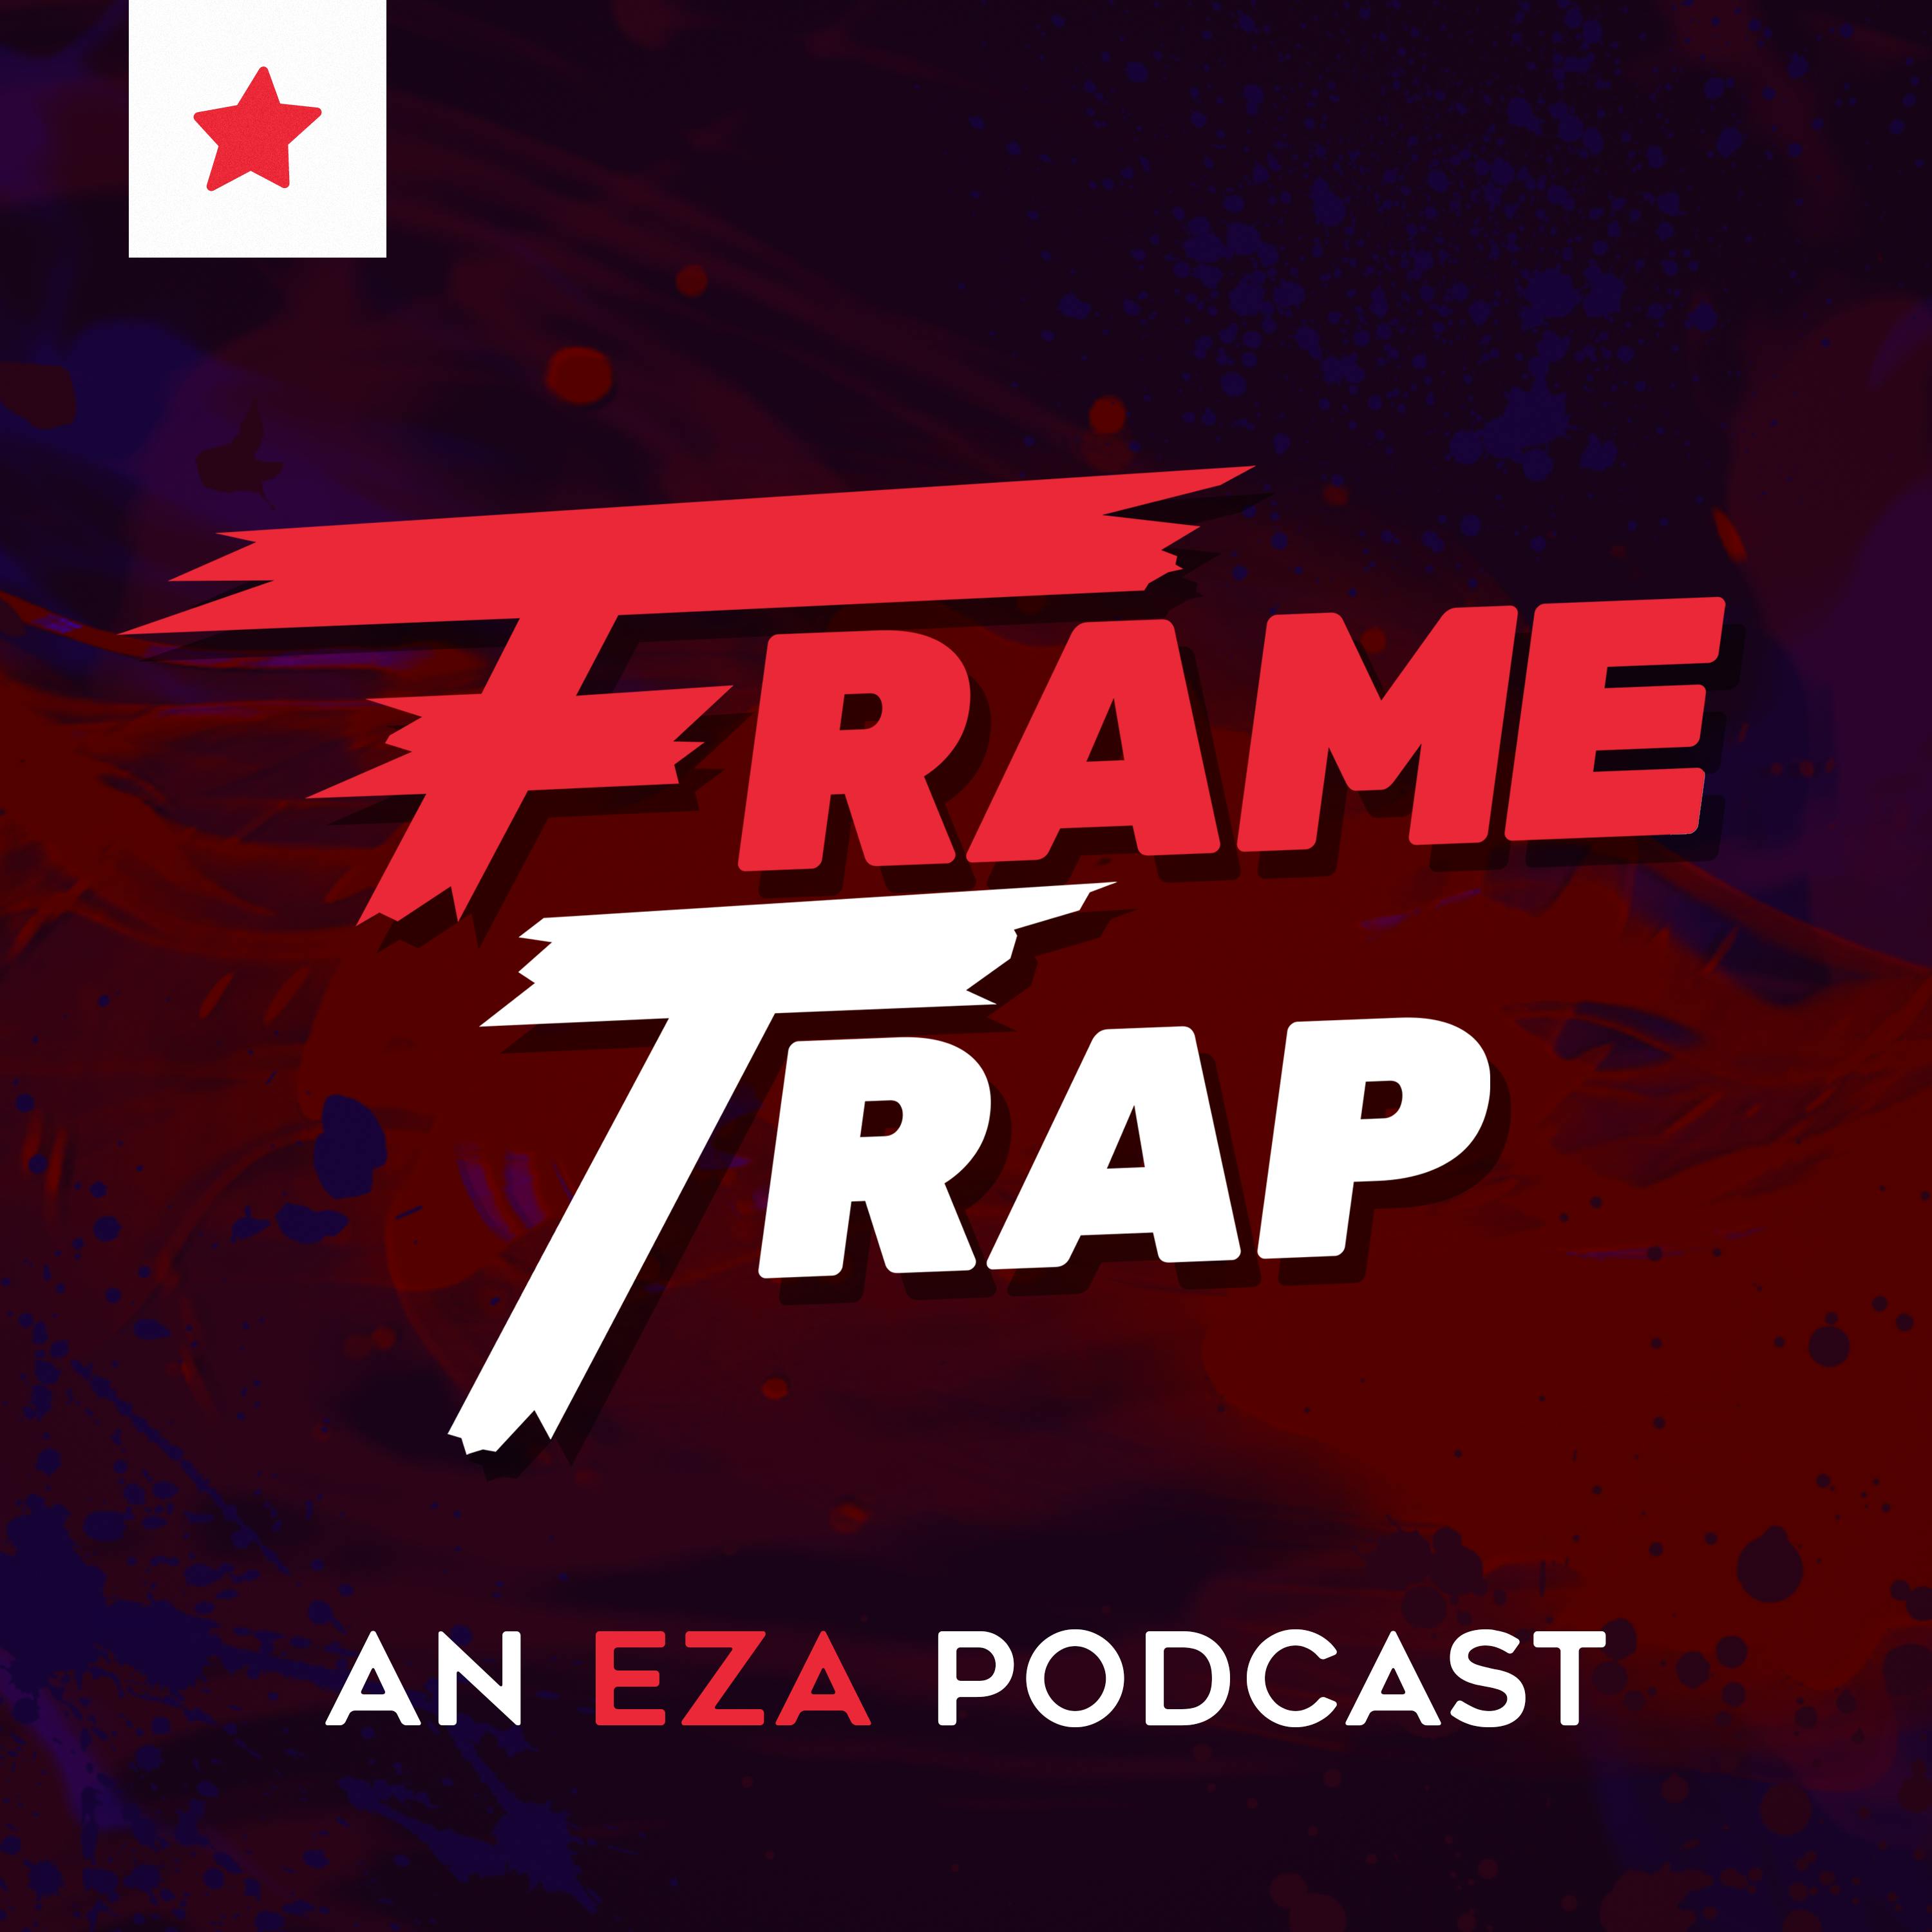 Frame Trap - Episode 173 